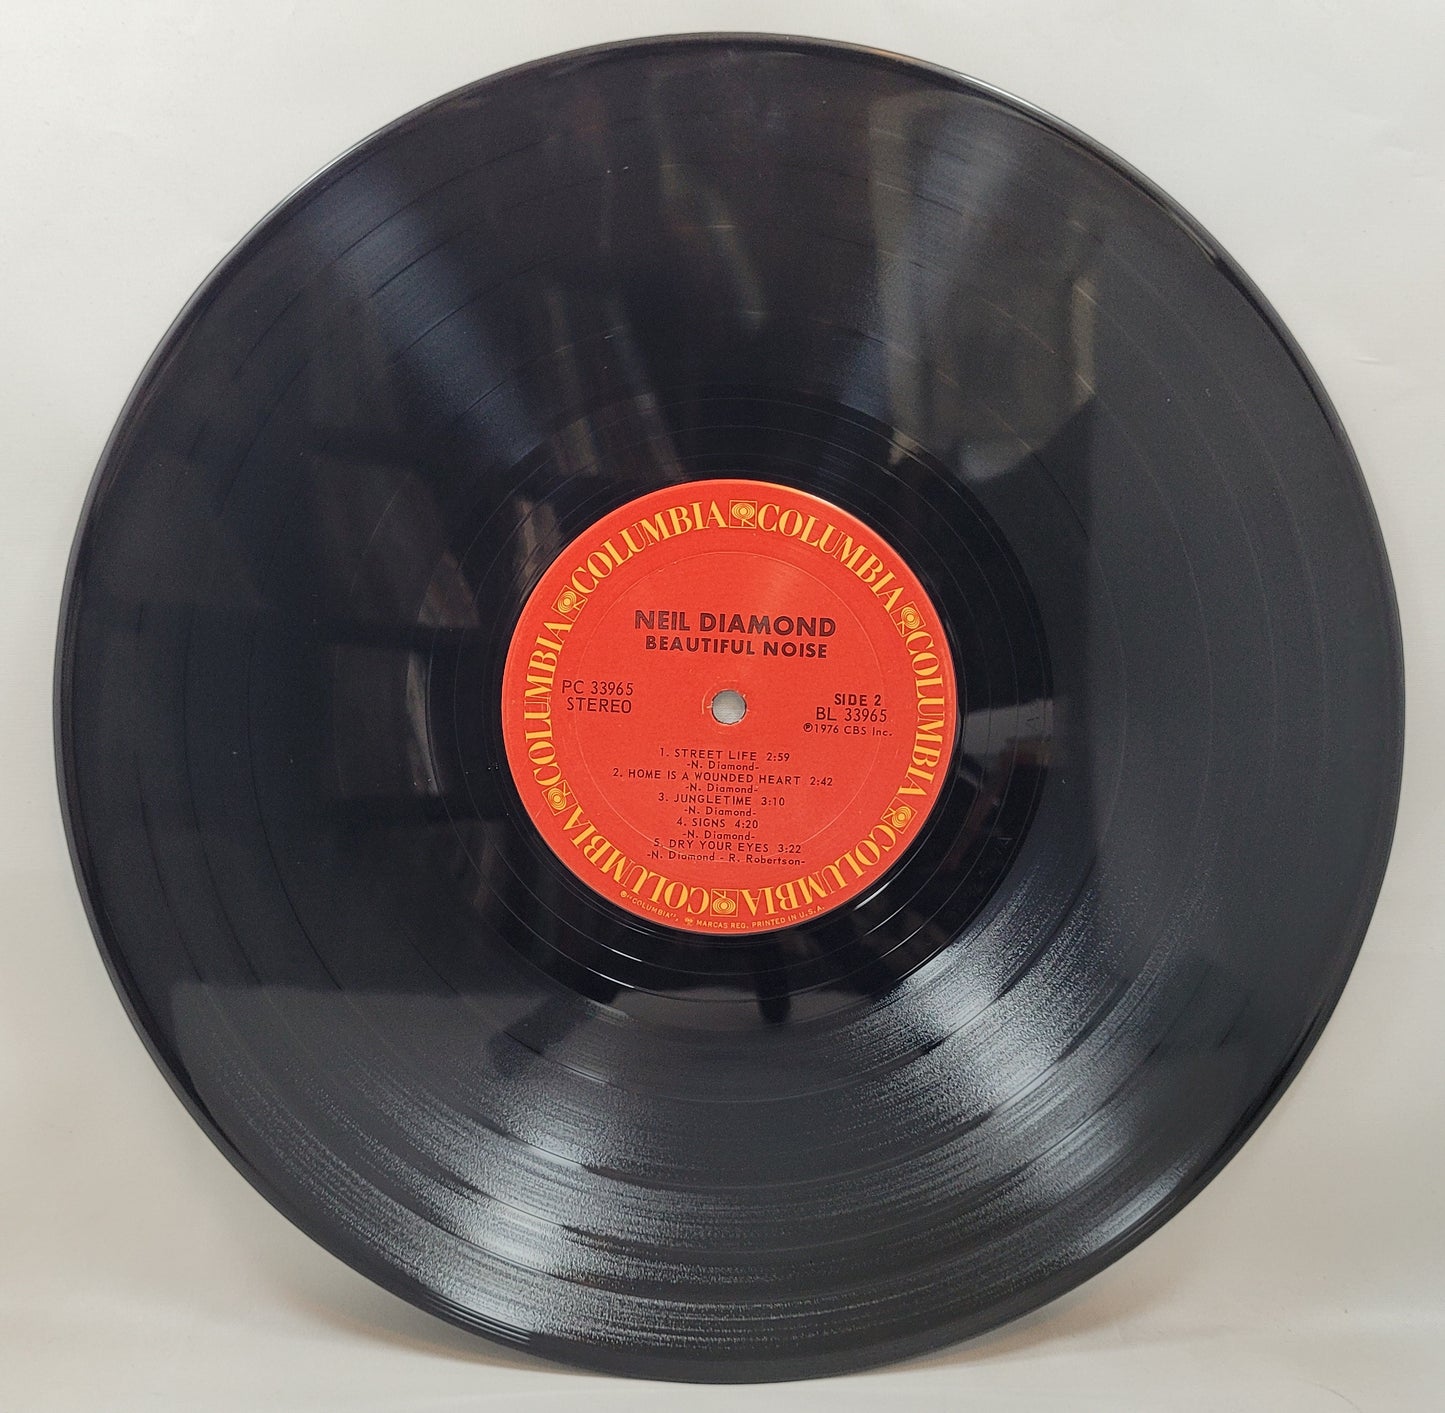 Neil Diamond - Beautiful Noise [1976 Santa Maria] [Used Vinyl Record LP]